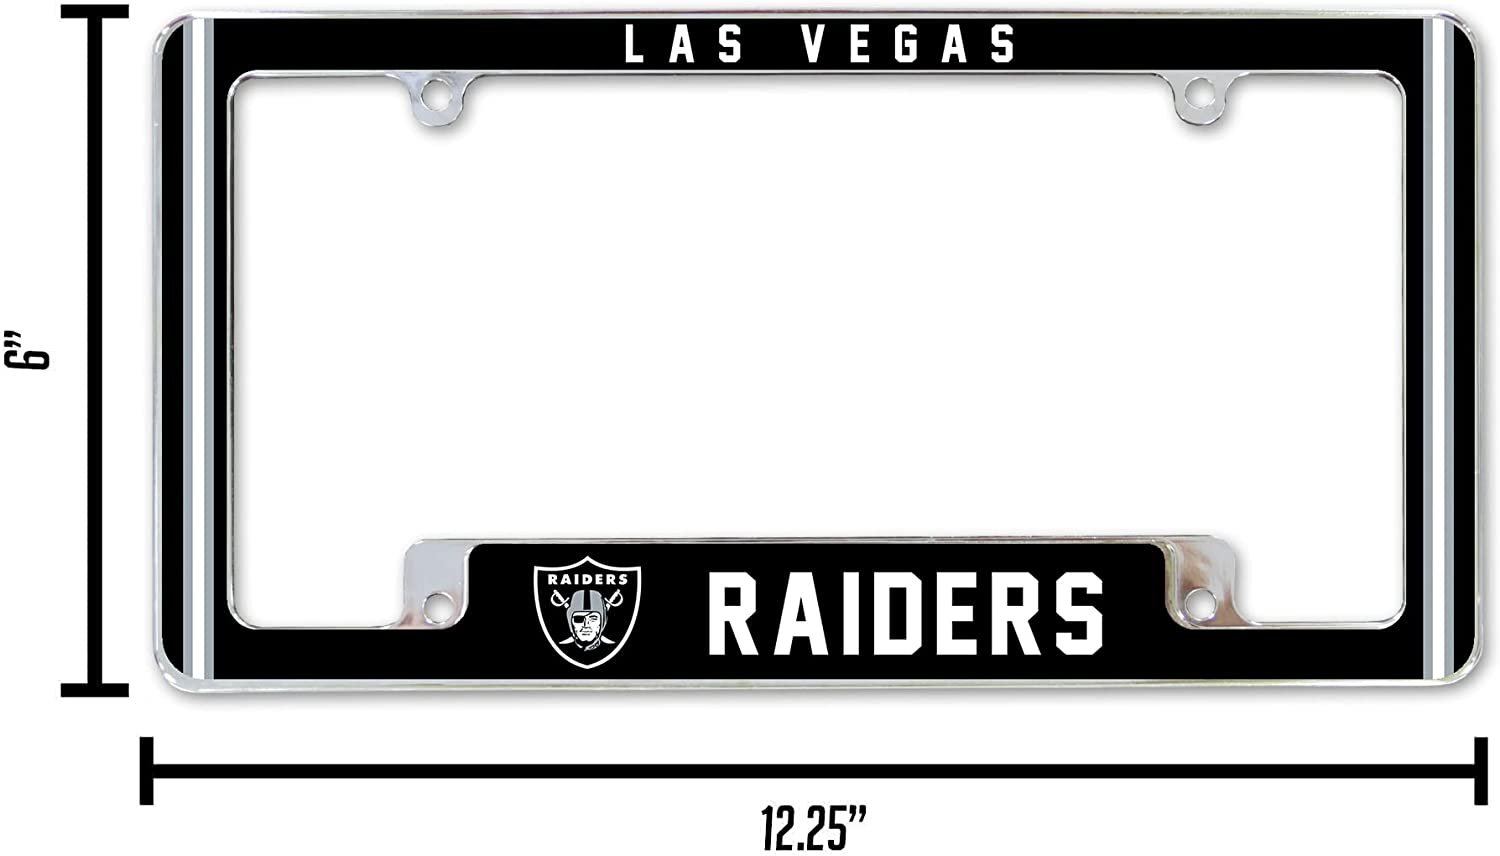 Las Vegas Raiders Metal License Plate Frame Chrome Tag Cover Alternate Design 6x12 Inch